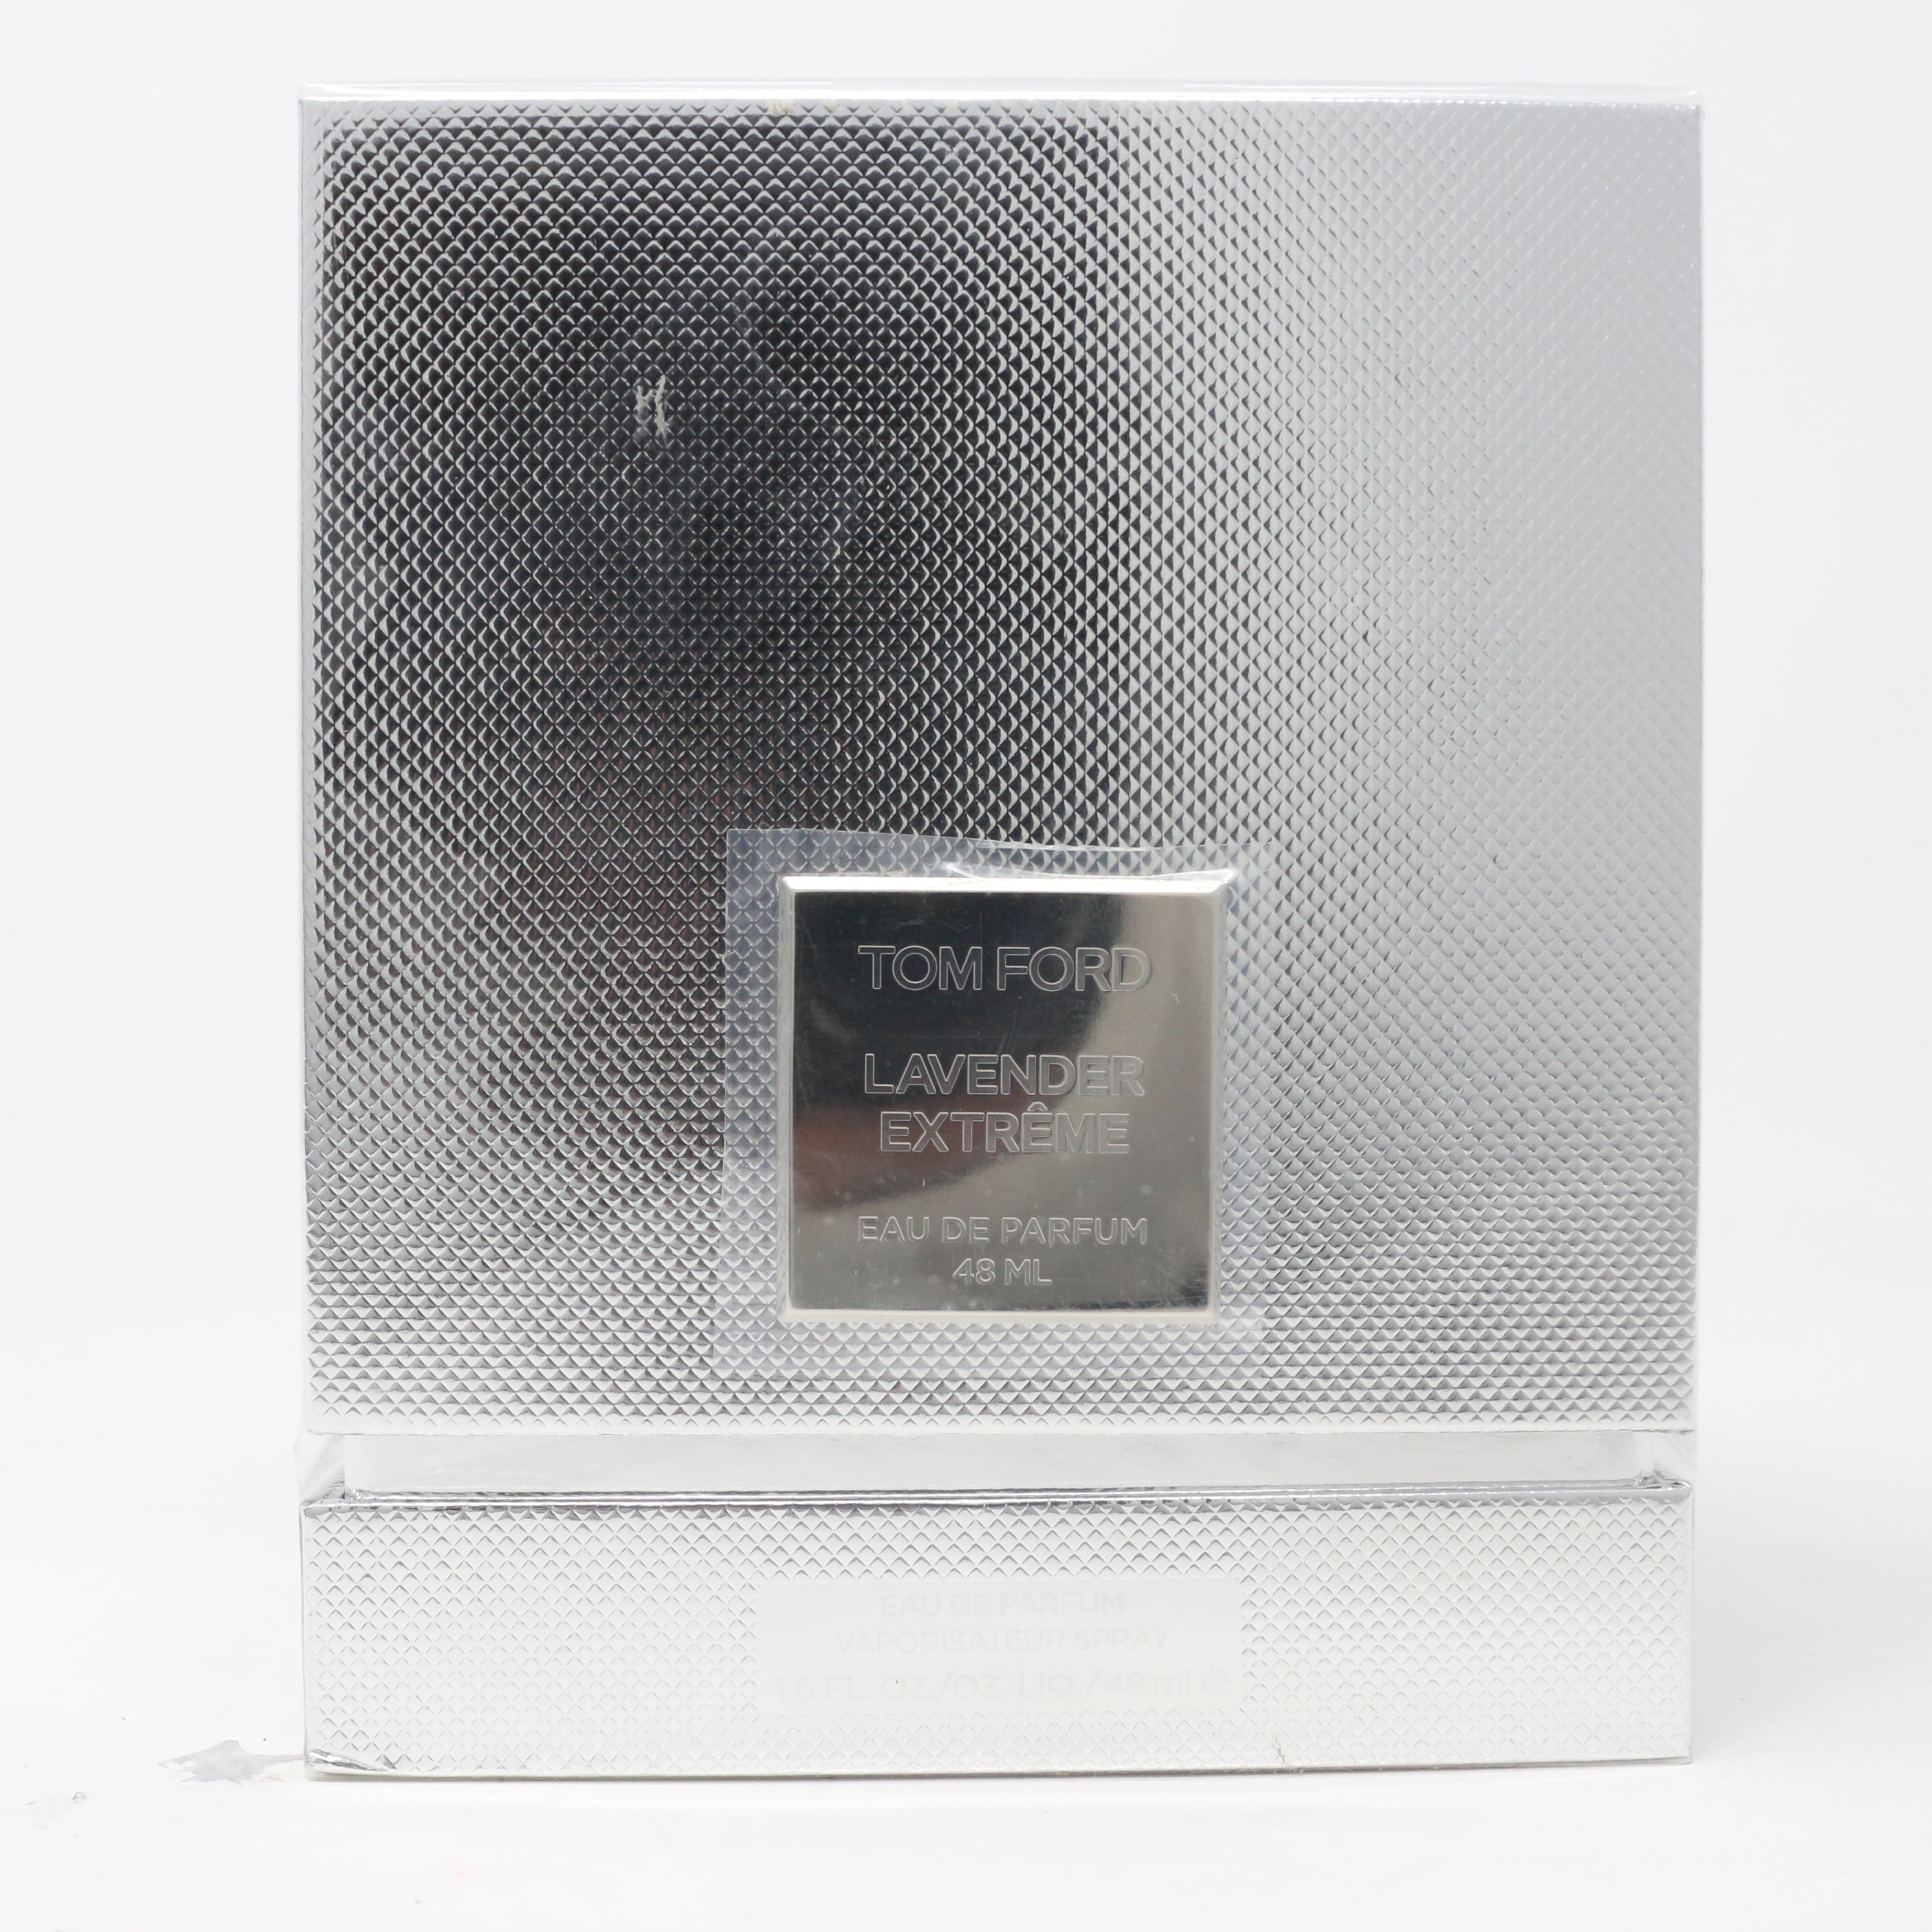 Lavender Extreme by Tom Ford Eau De Parfum 1.6oz/48ml Spray New In Box 